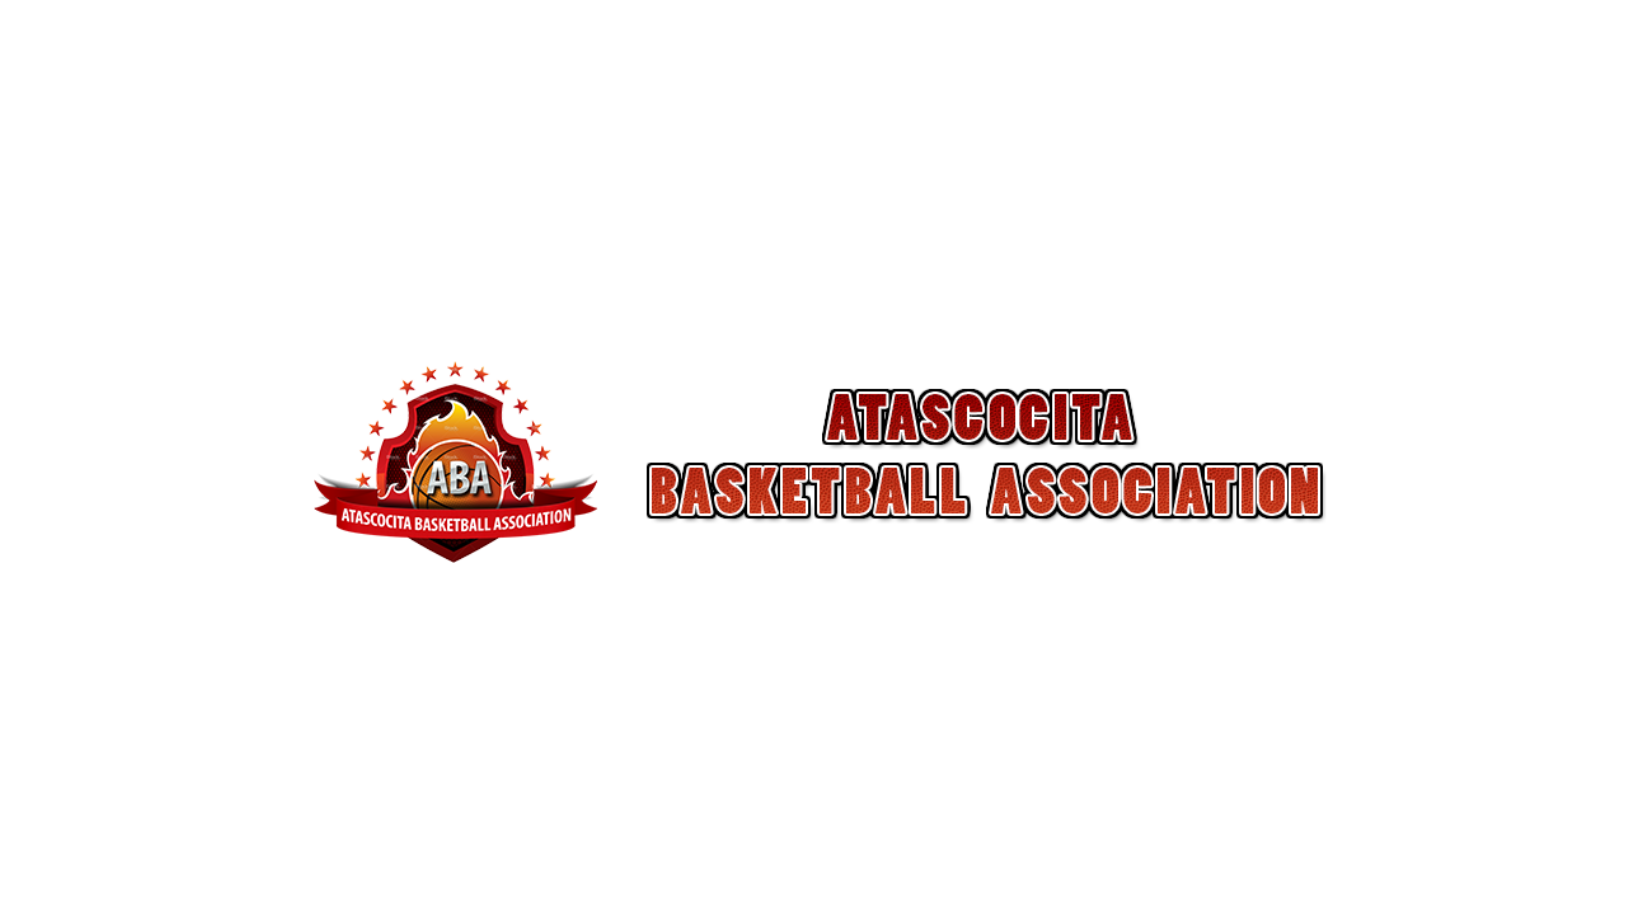 Atascocita Basketball Association